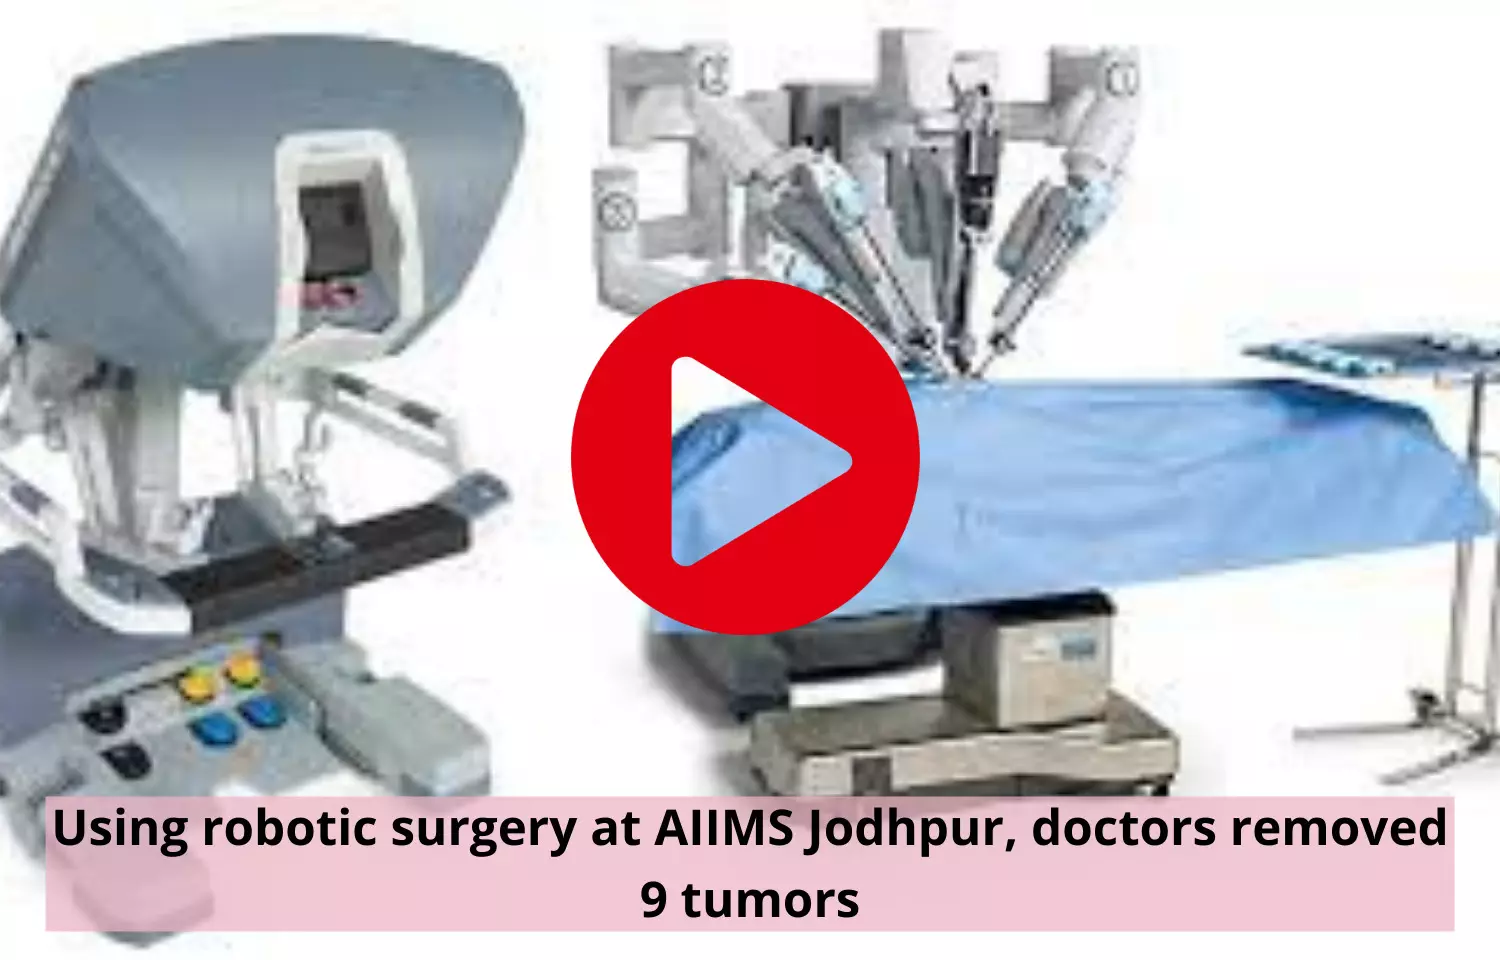 AIIMS Jodhpur doctors remove 9 kidney tumors using robotic surgery